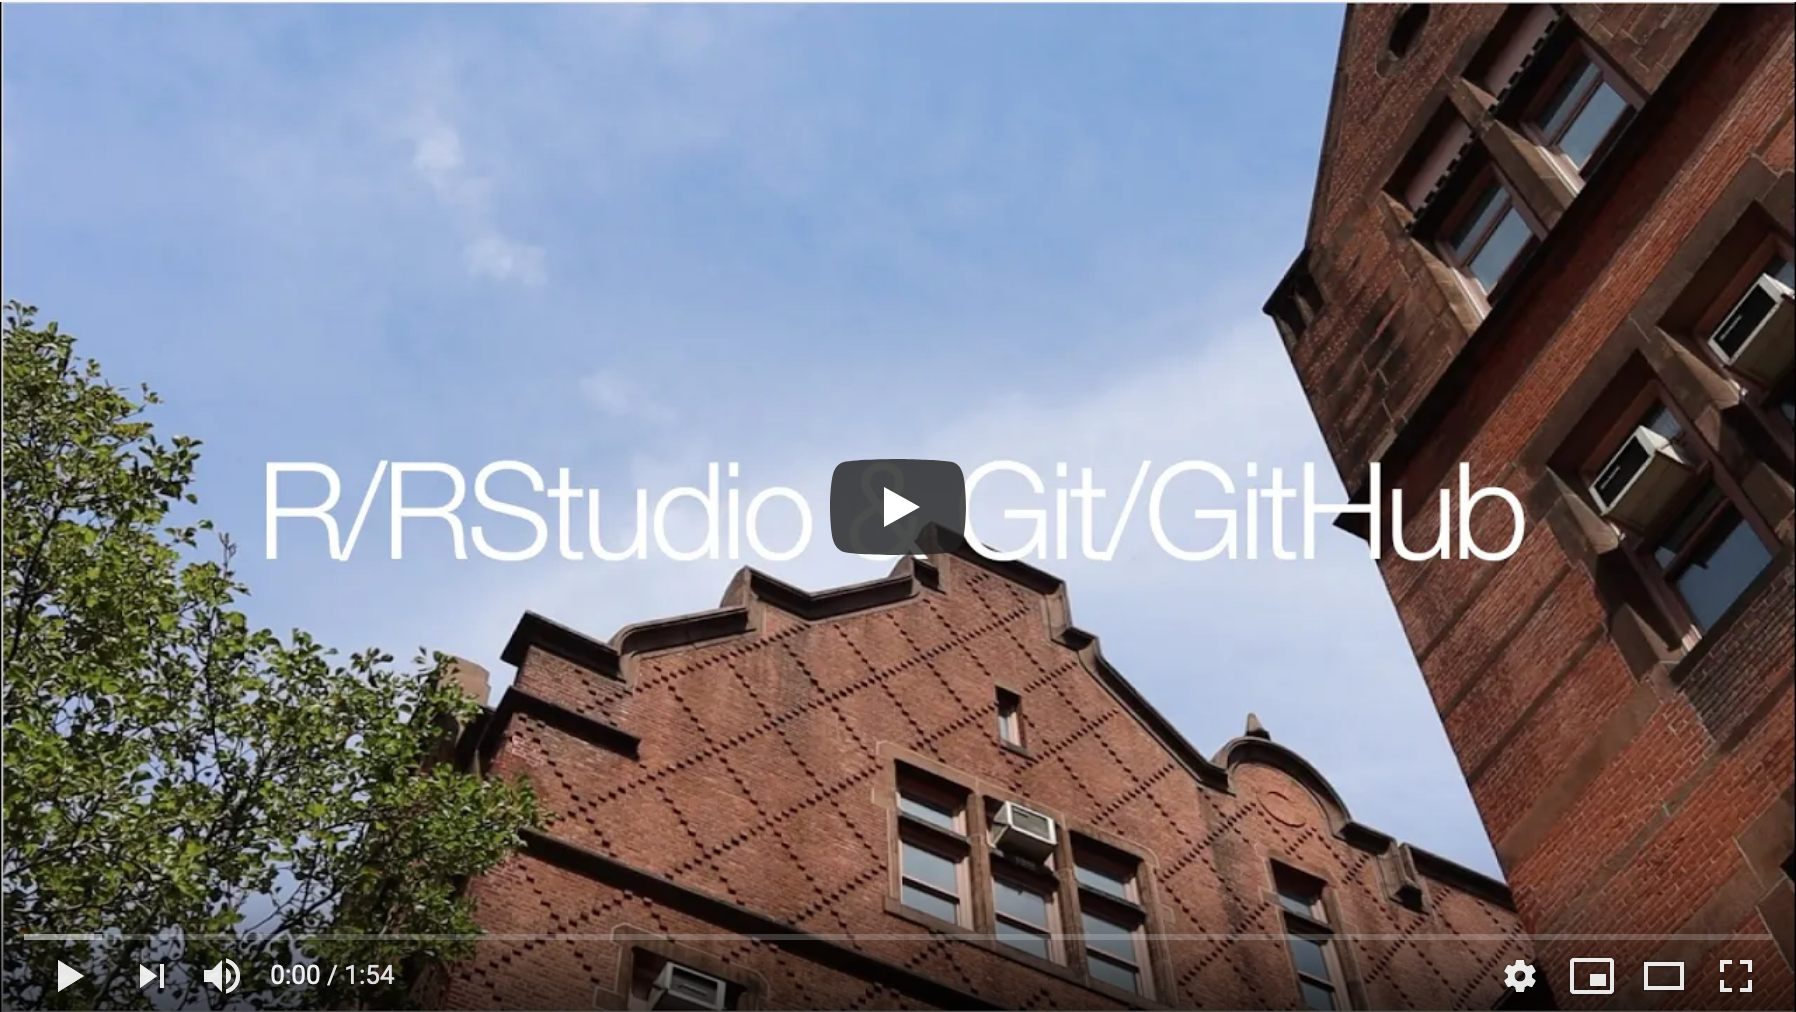 R/RStudio & Git/Github